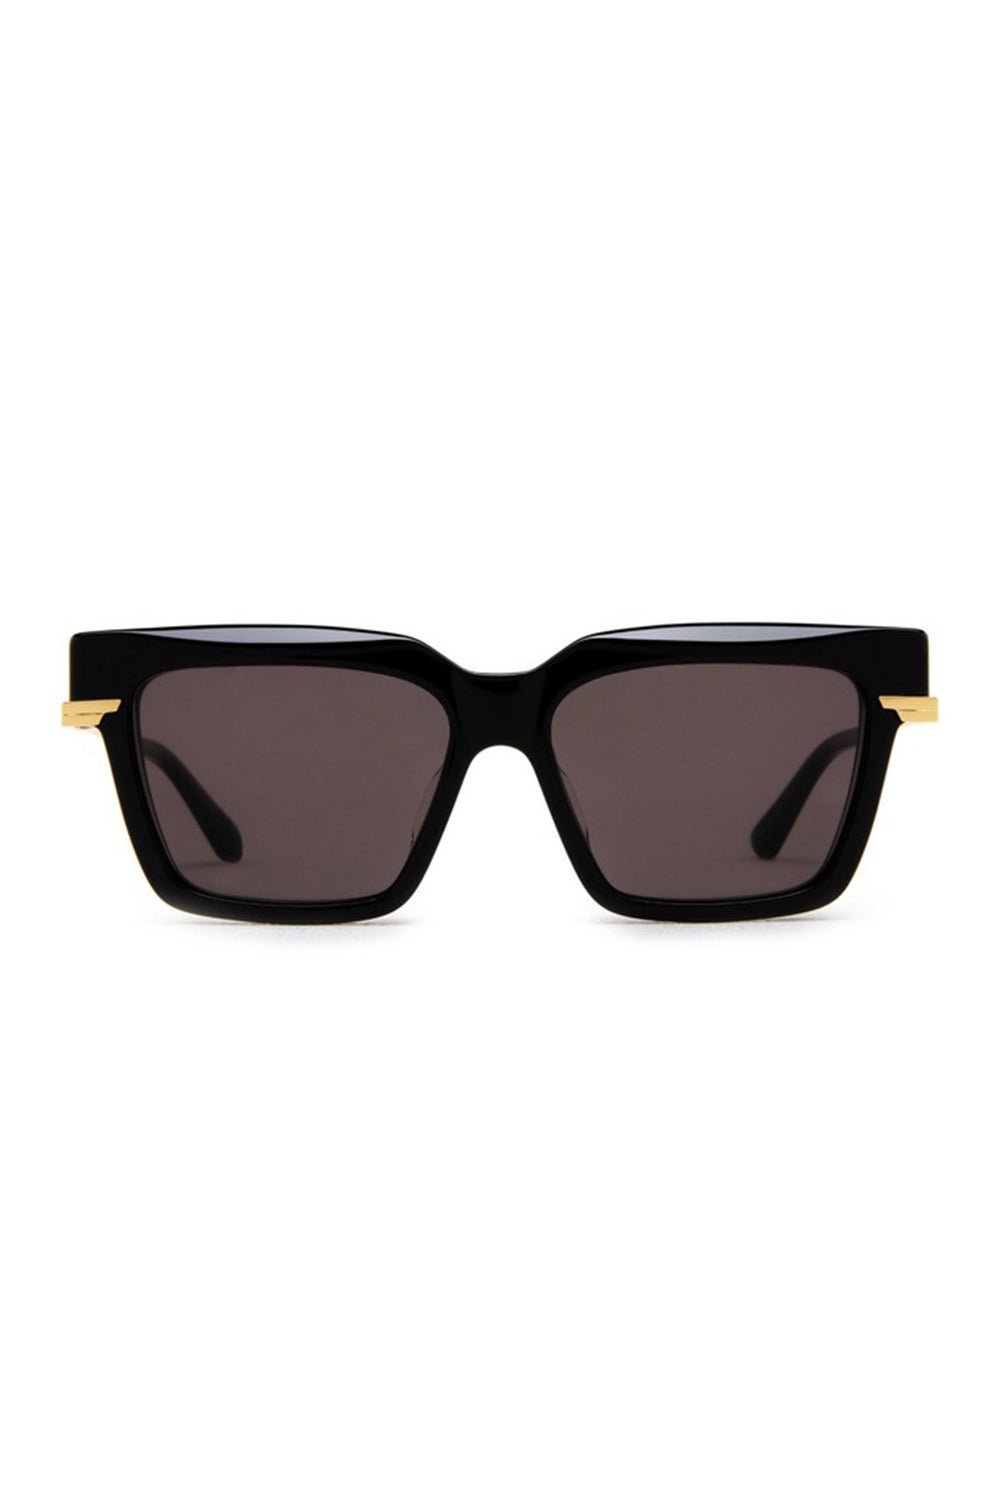 BOTTEGA VENETA-Square Sunglasses-BLACK/GREY